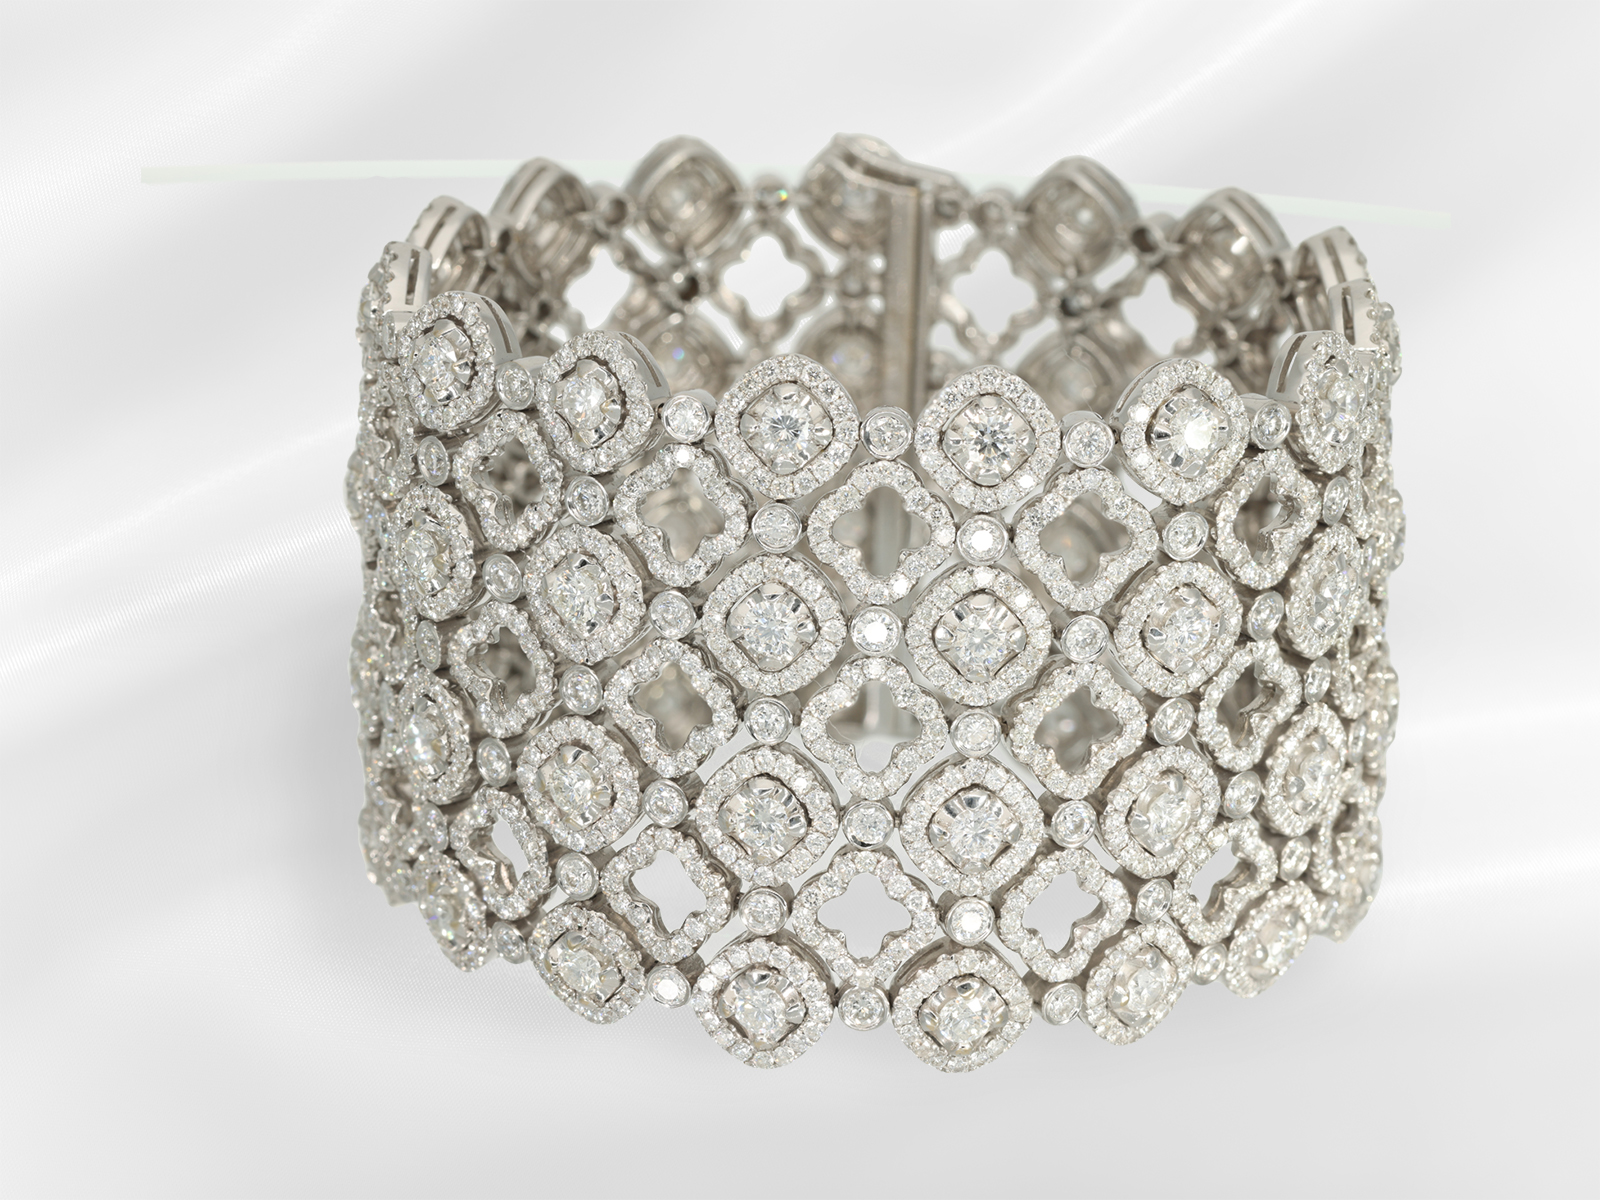 Unique, high-carat brilliant-cut diamond bracelet in 18K white gold, expensive craftsmanship, approx - Image 3 of 5